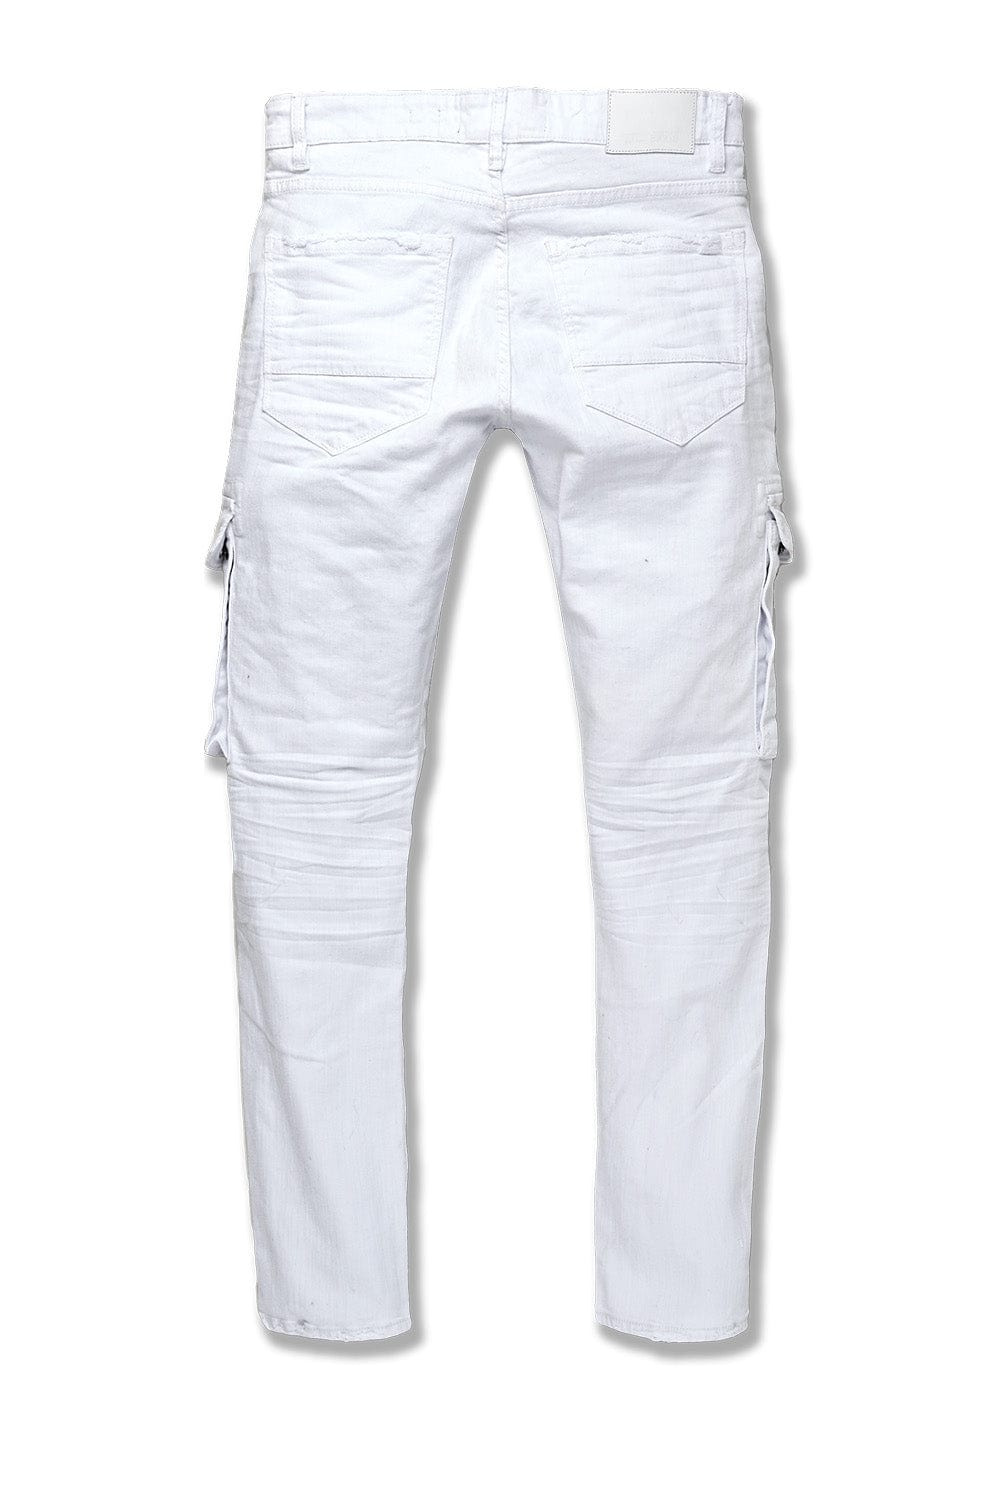 Jordan Craig Sean - Tribeca Cargo Pants (White)